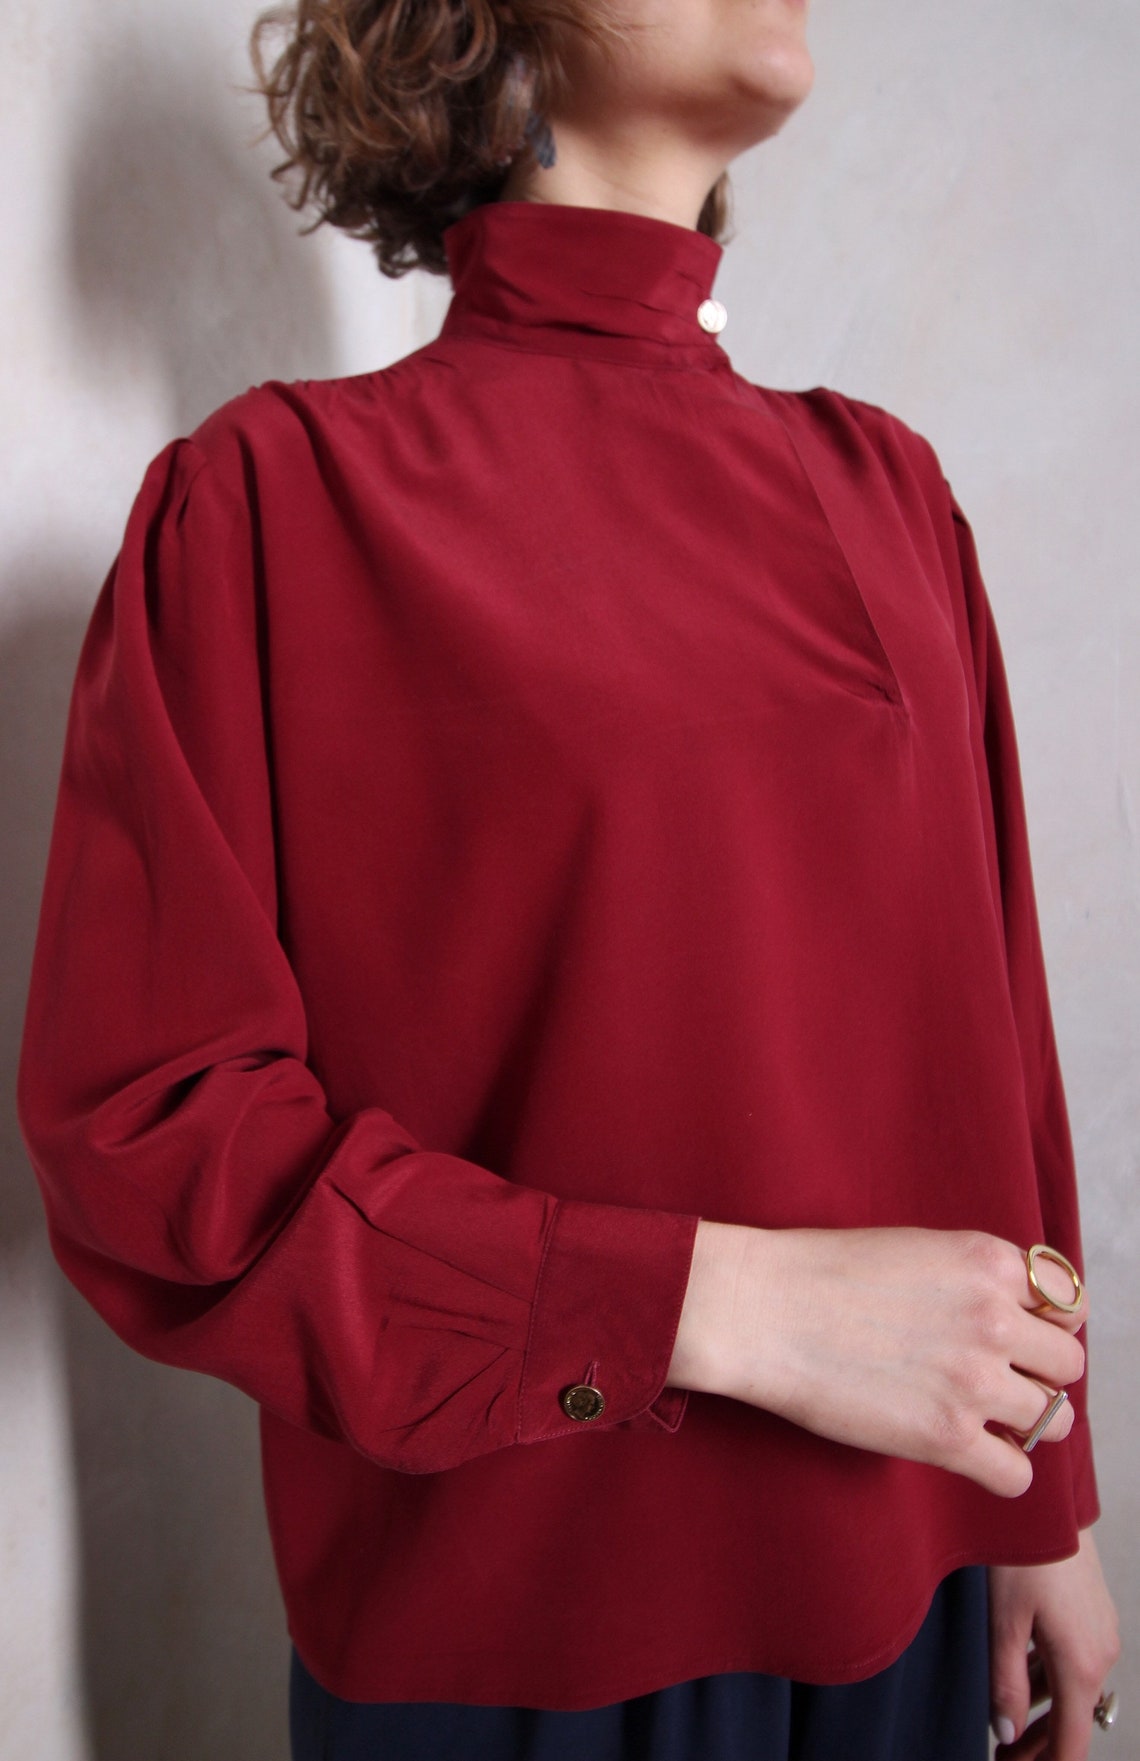 Burgundy red silk vintage blouse high collar blouse | Etsy